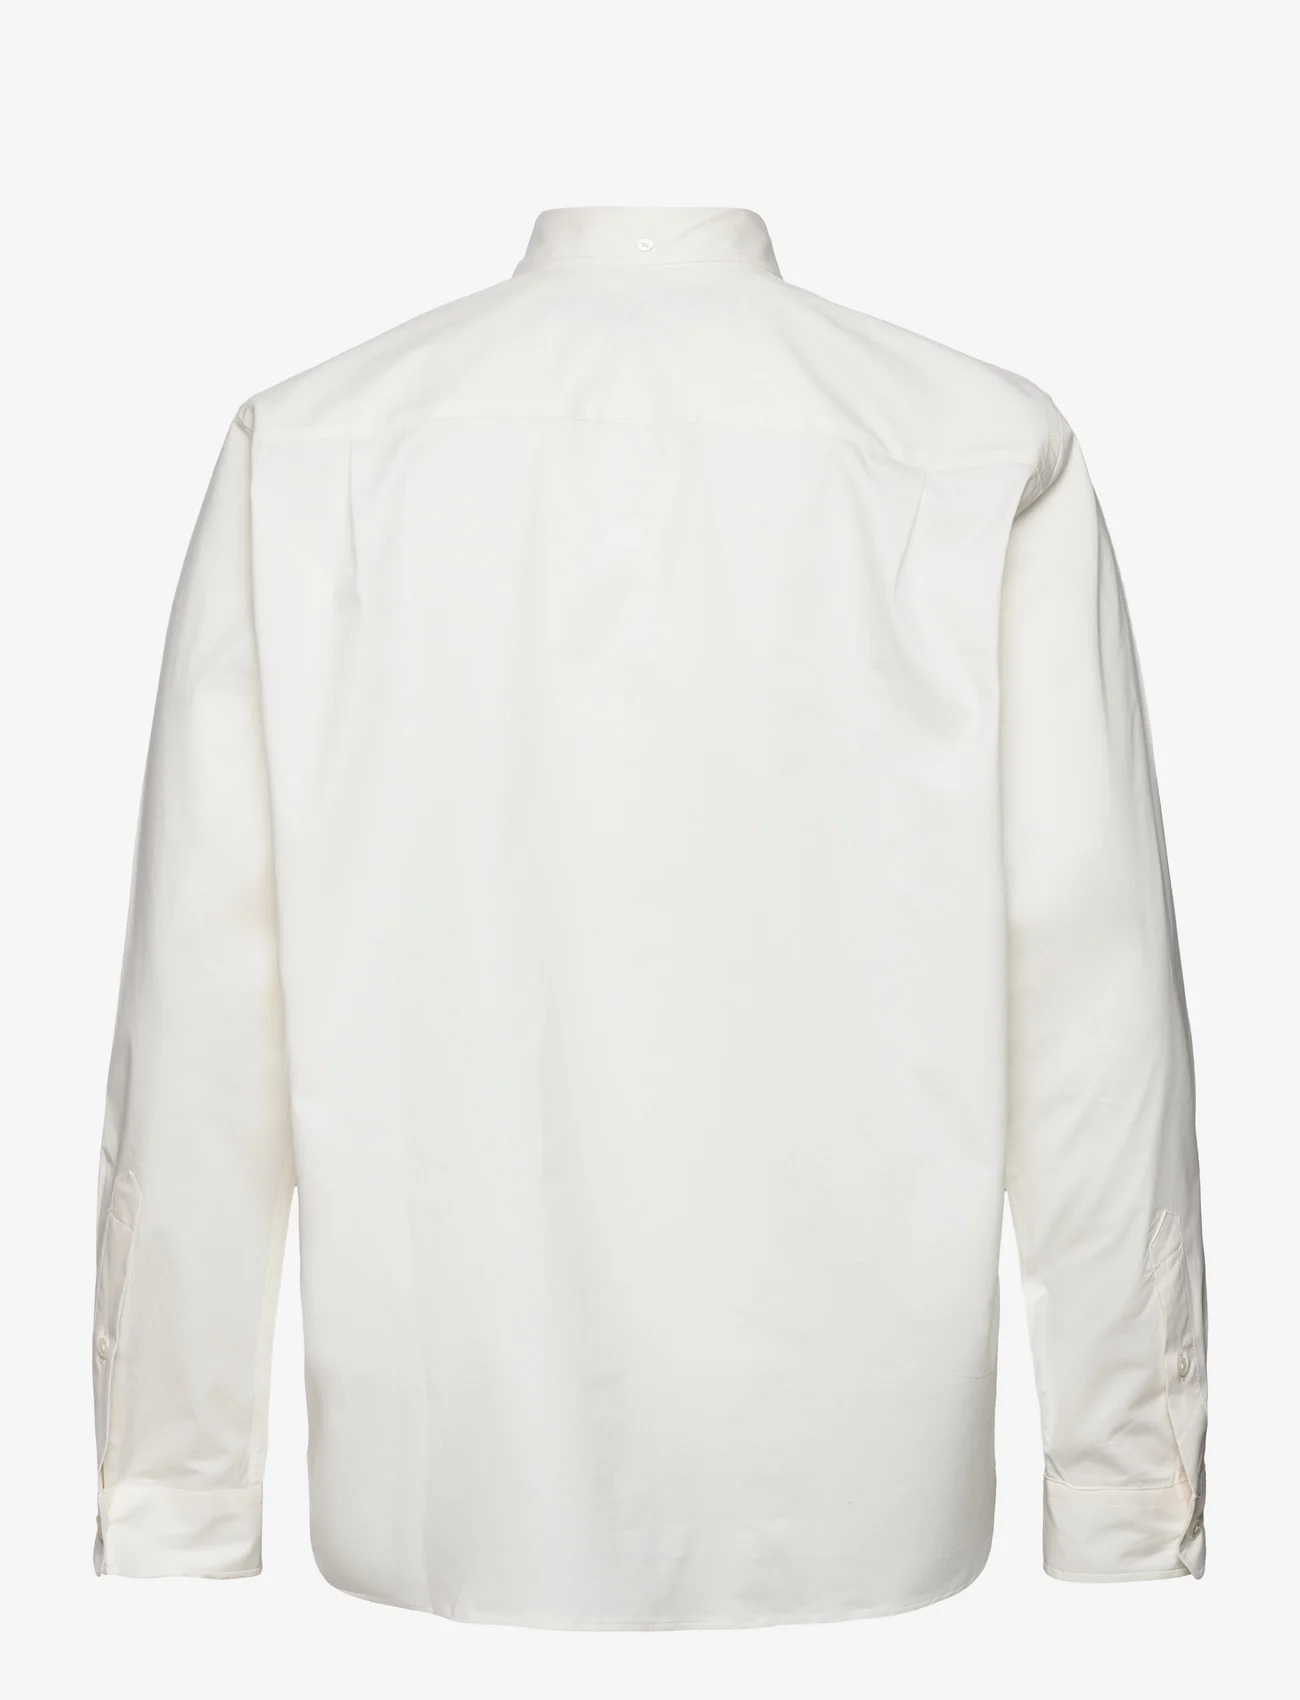 Schnayderman's - SHIRT BD NON-BINARY EMBROIDERY TWILL - basic skjortor - raw white - 1